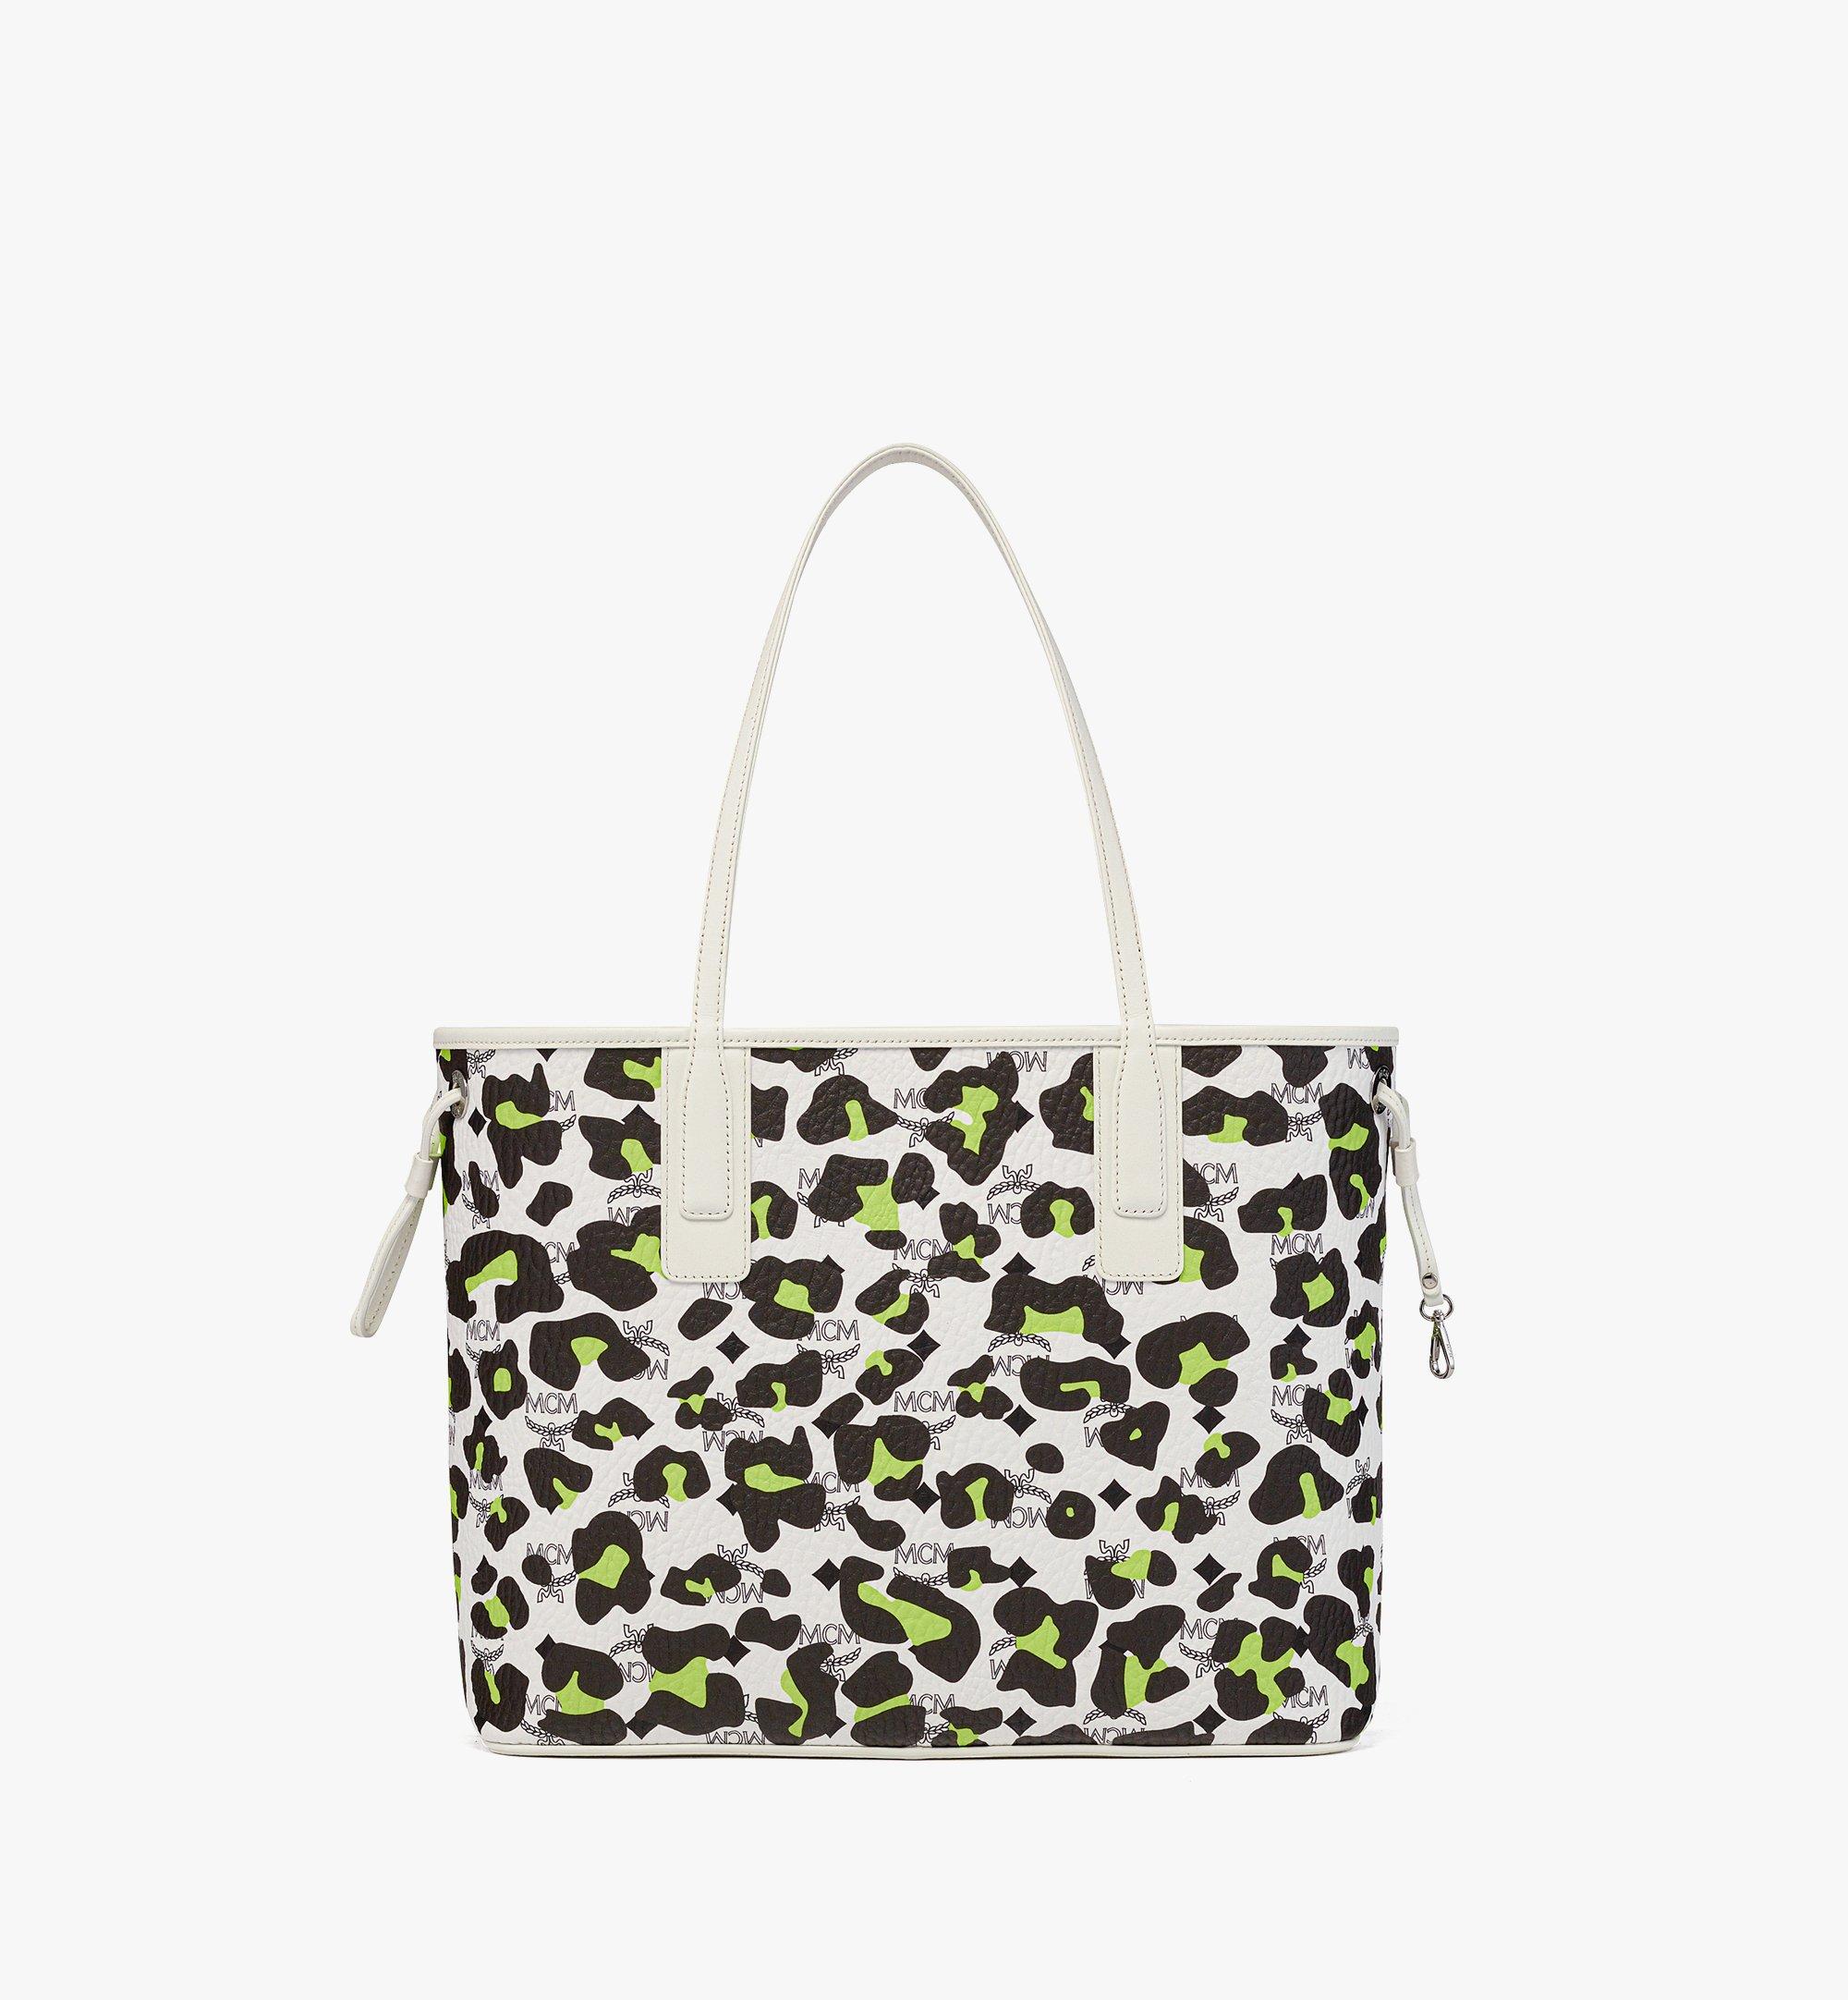 MCM: tote bags for woman - Grey  Mcm tote bags MWPBSER01 online at